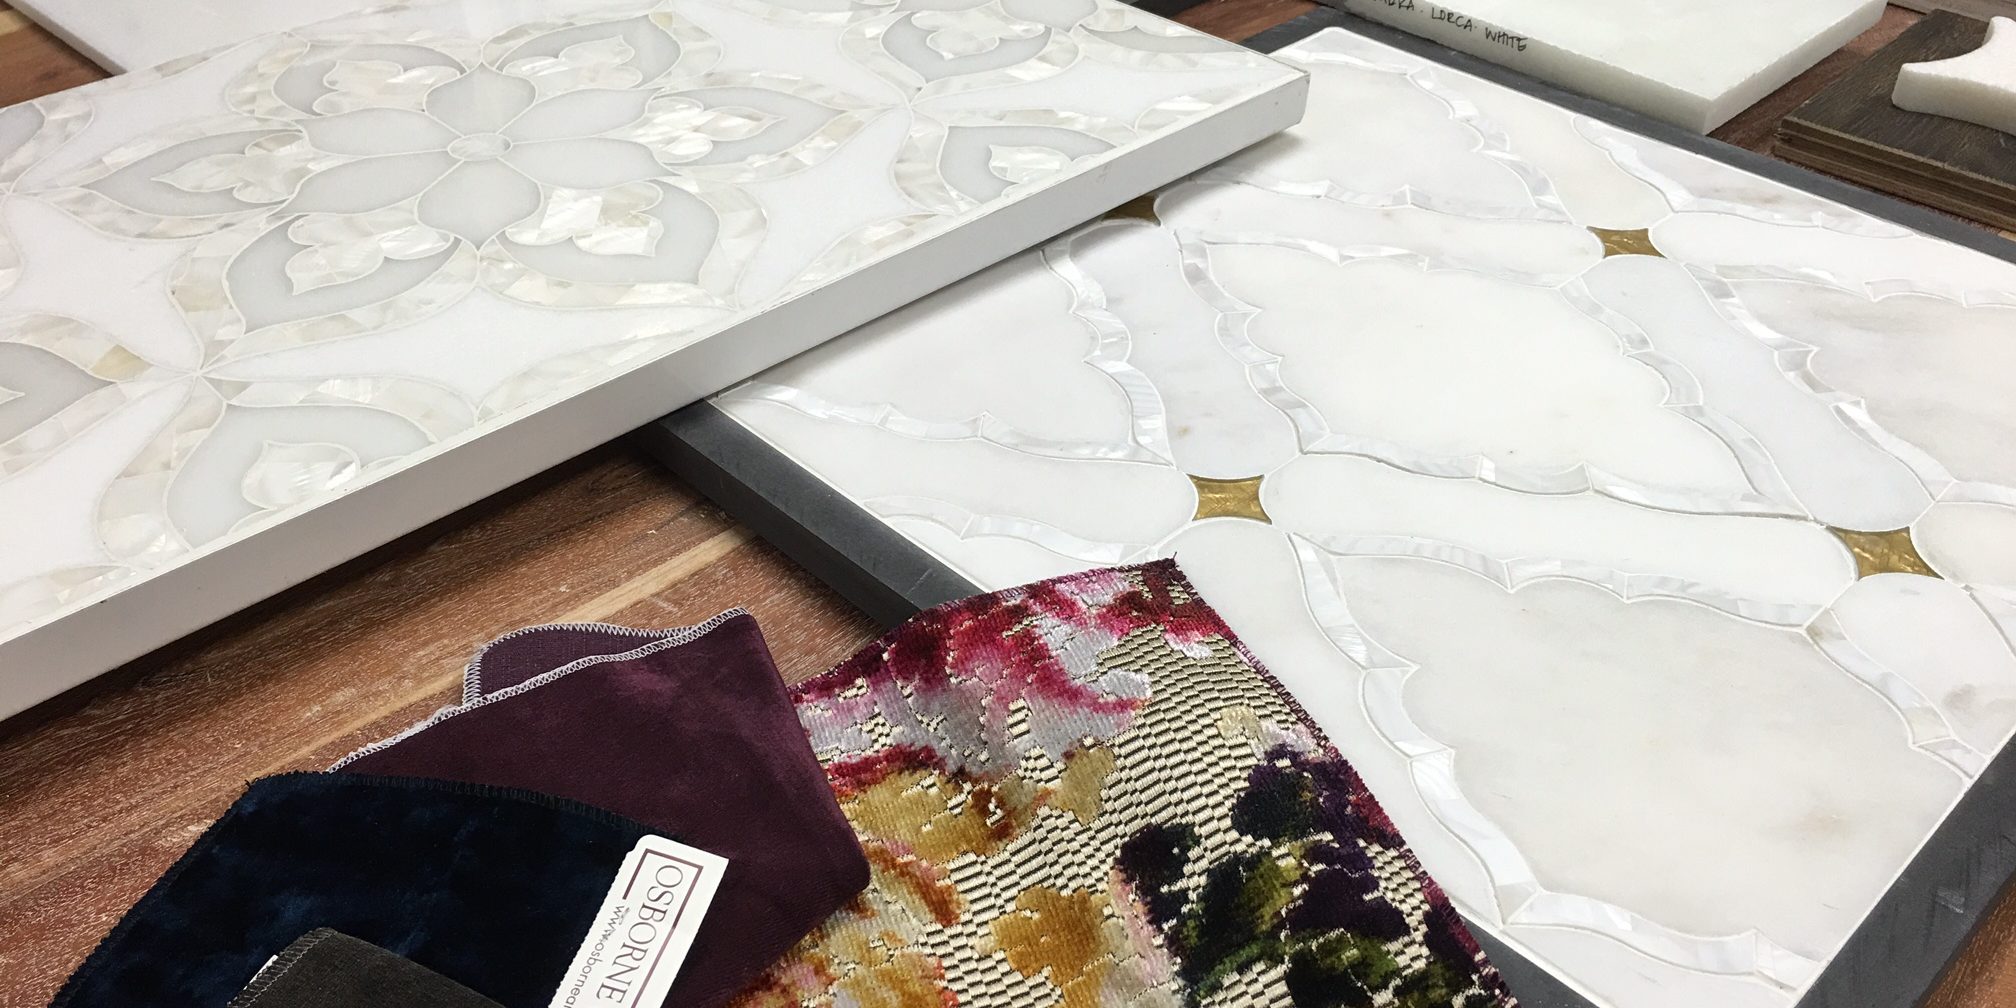 Selecting Fabrics and Textiles